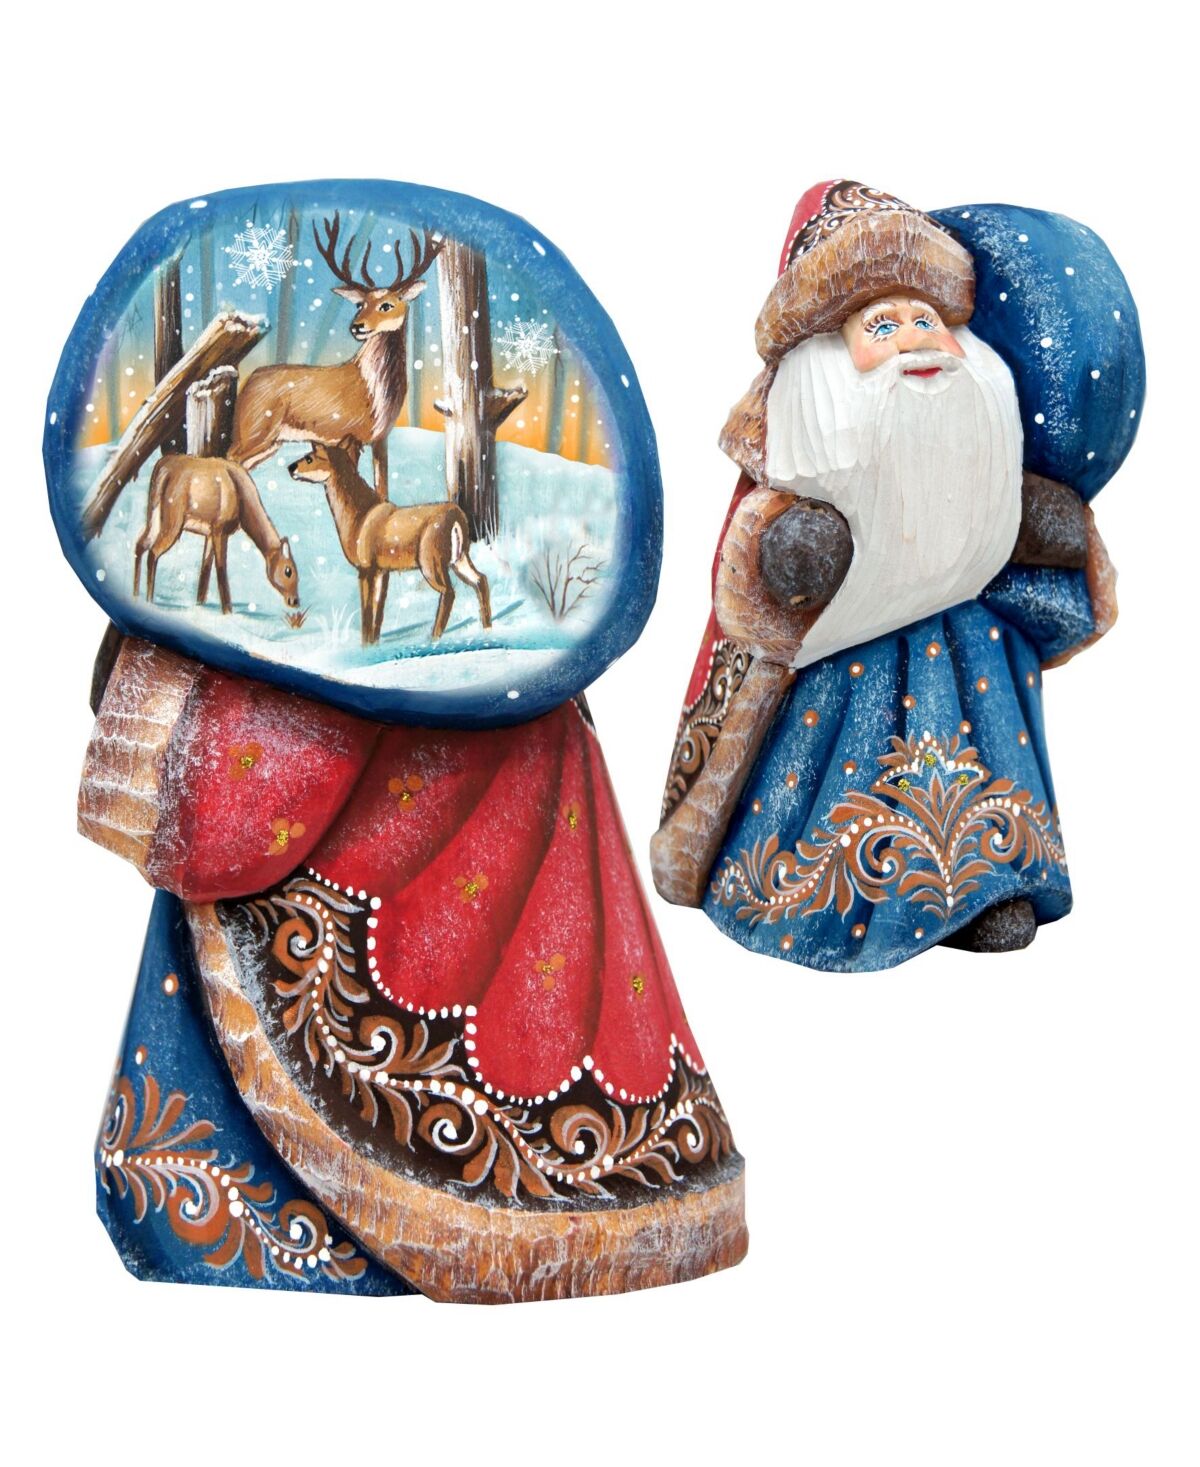 G.DeBrekht Woodcarved and Hand Painted Santa Reindeer Figurine with Bag - Multi